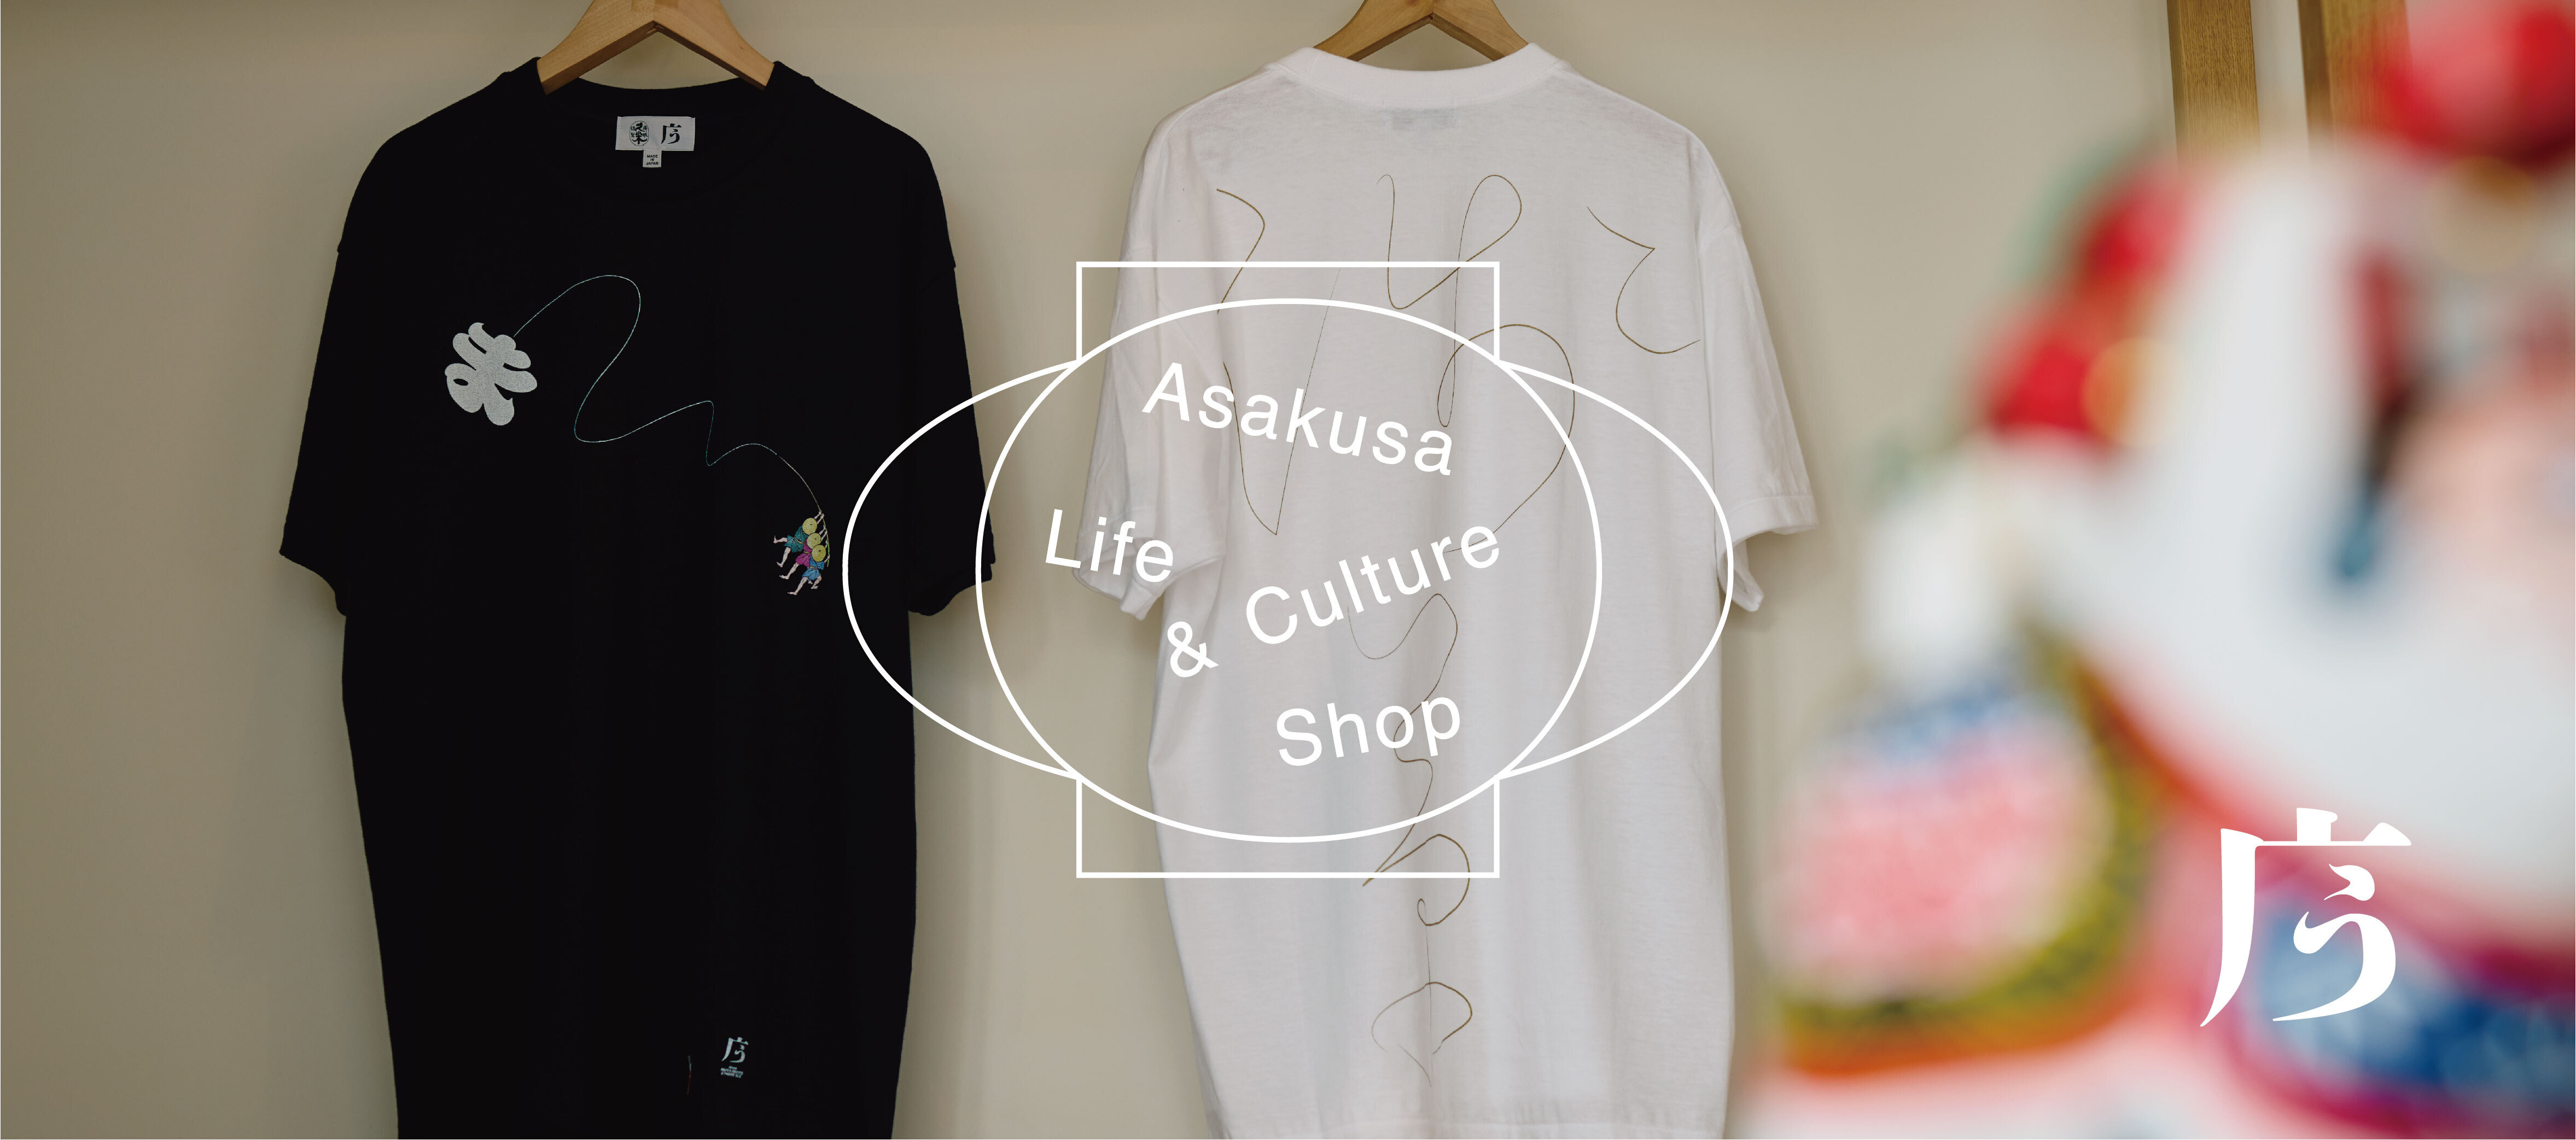 Asakusa Life & Culture Shop